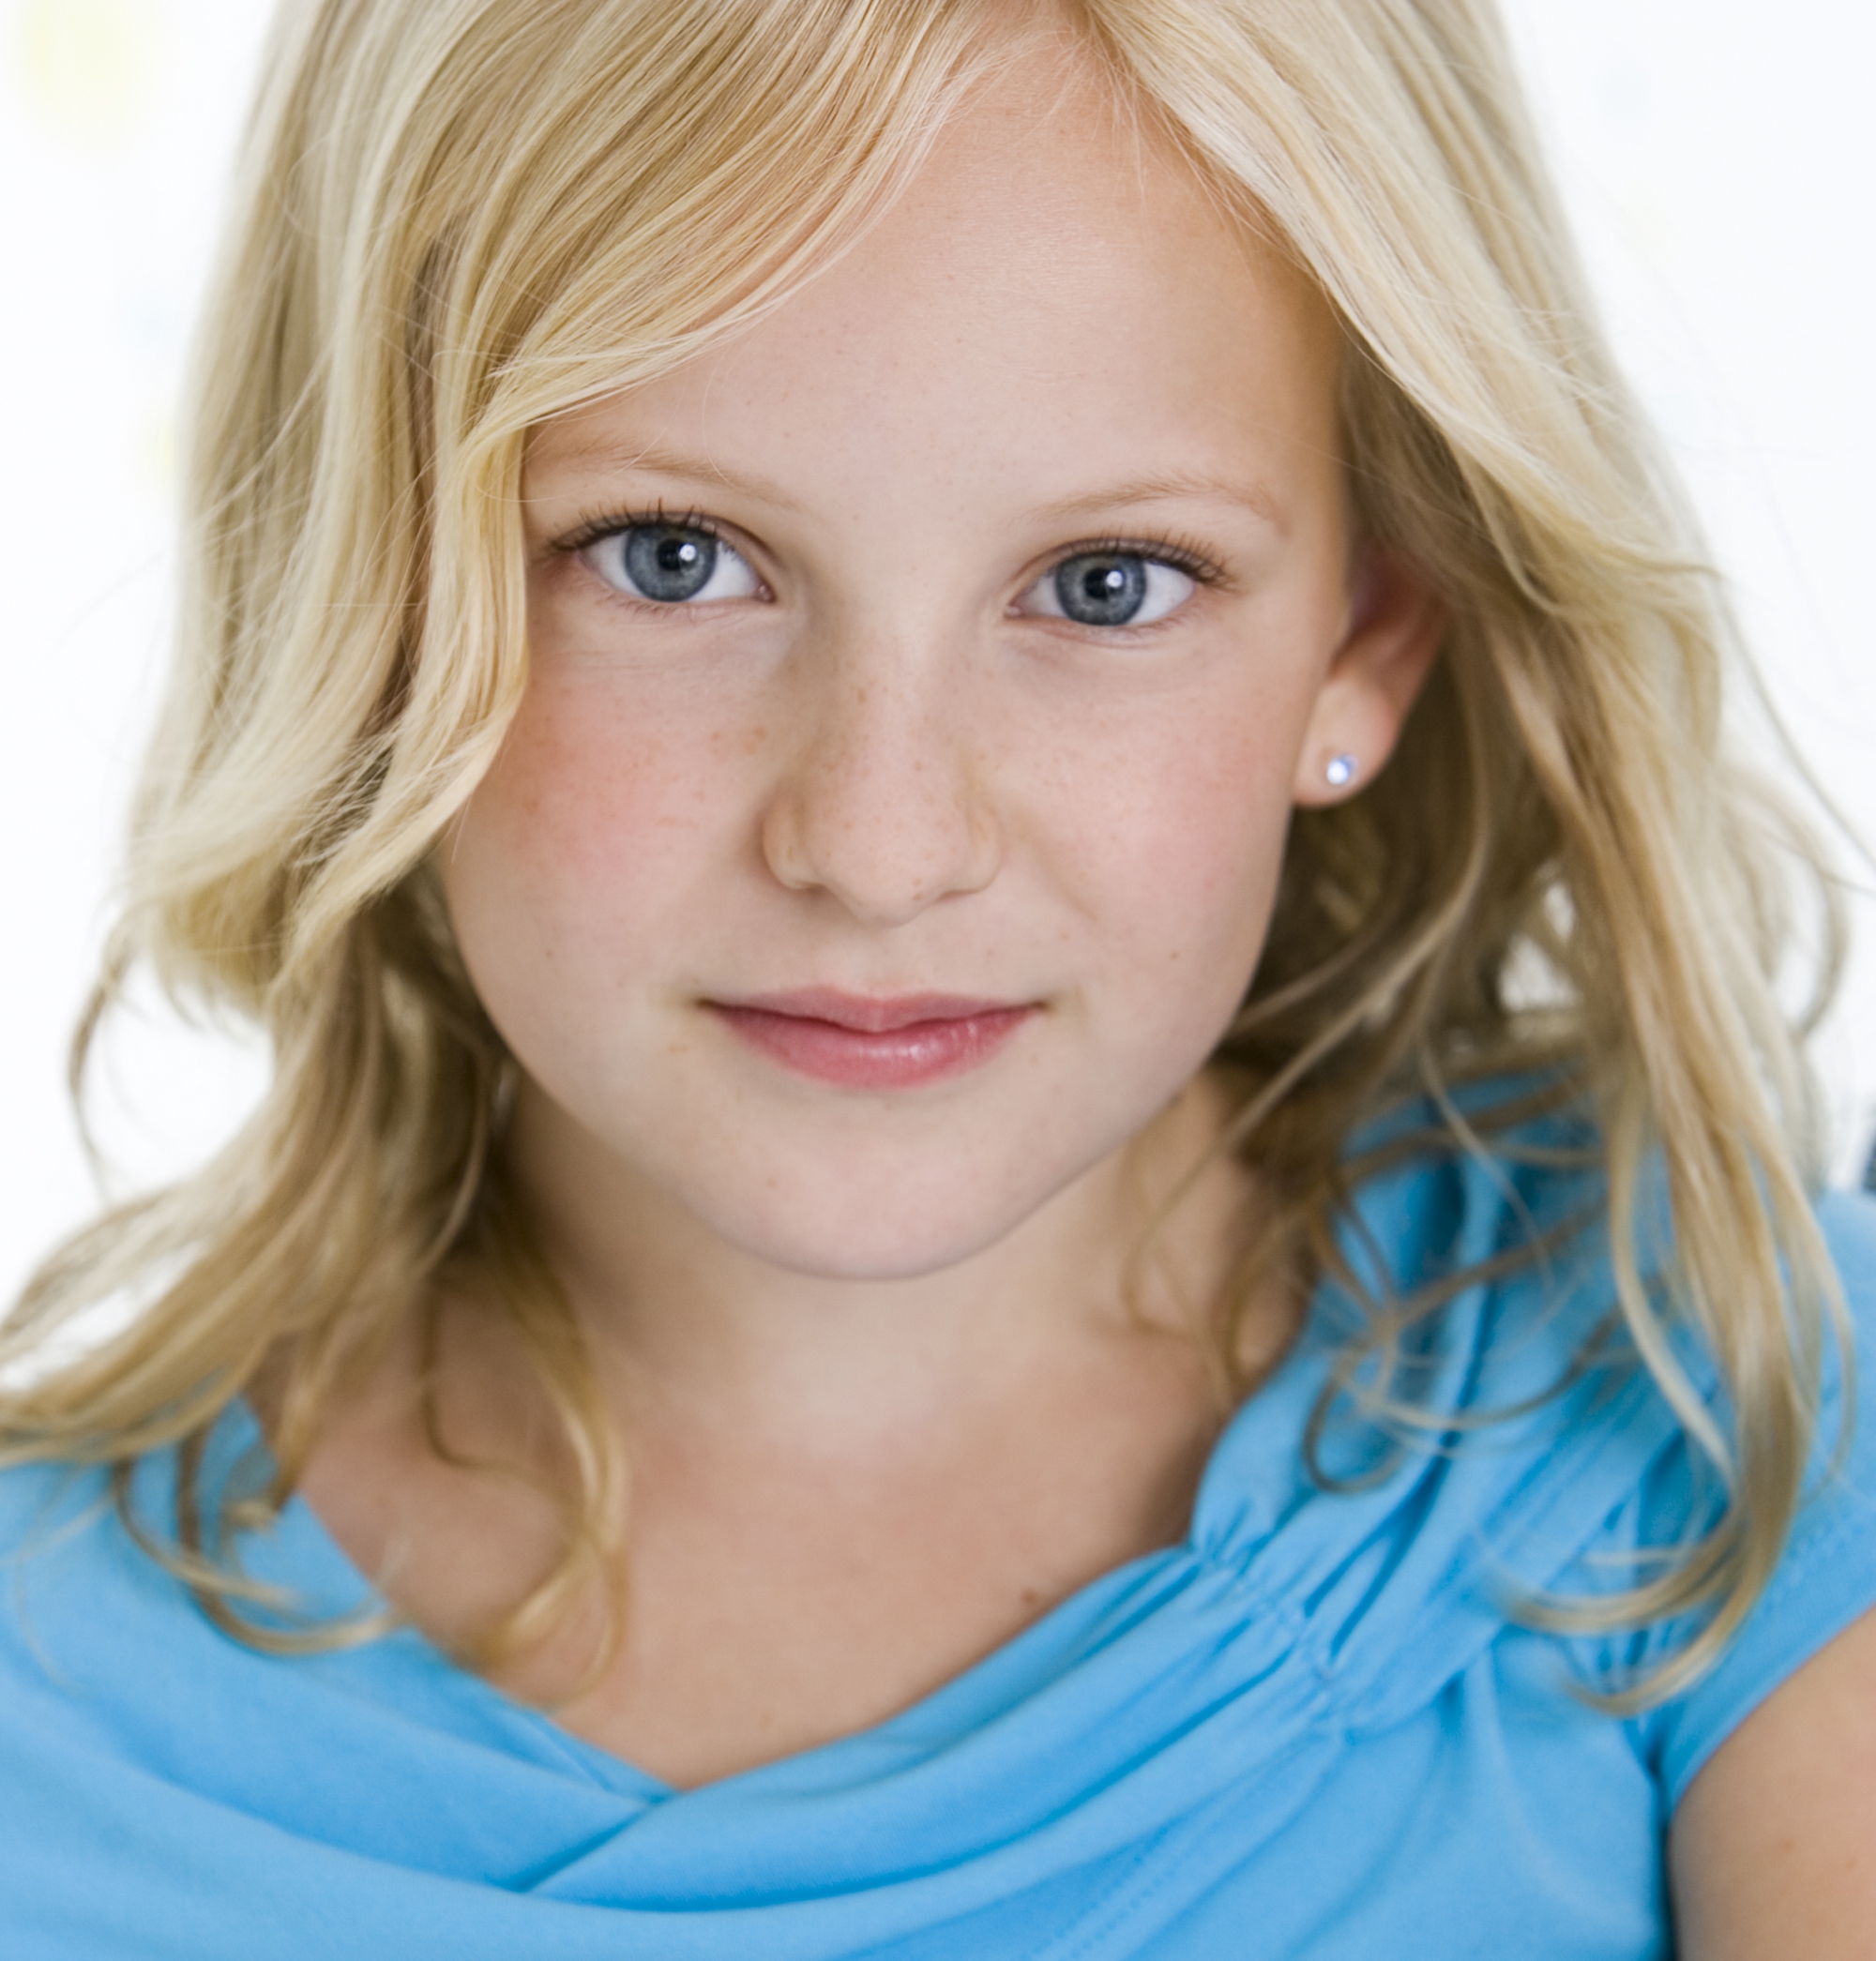 Chloe Greenfield Blonde Child Actor Headshot Straightforward Mona Lisa Smile